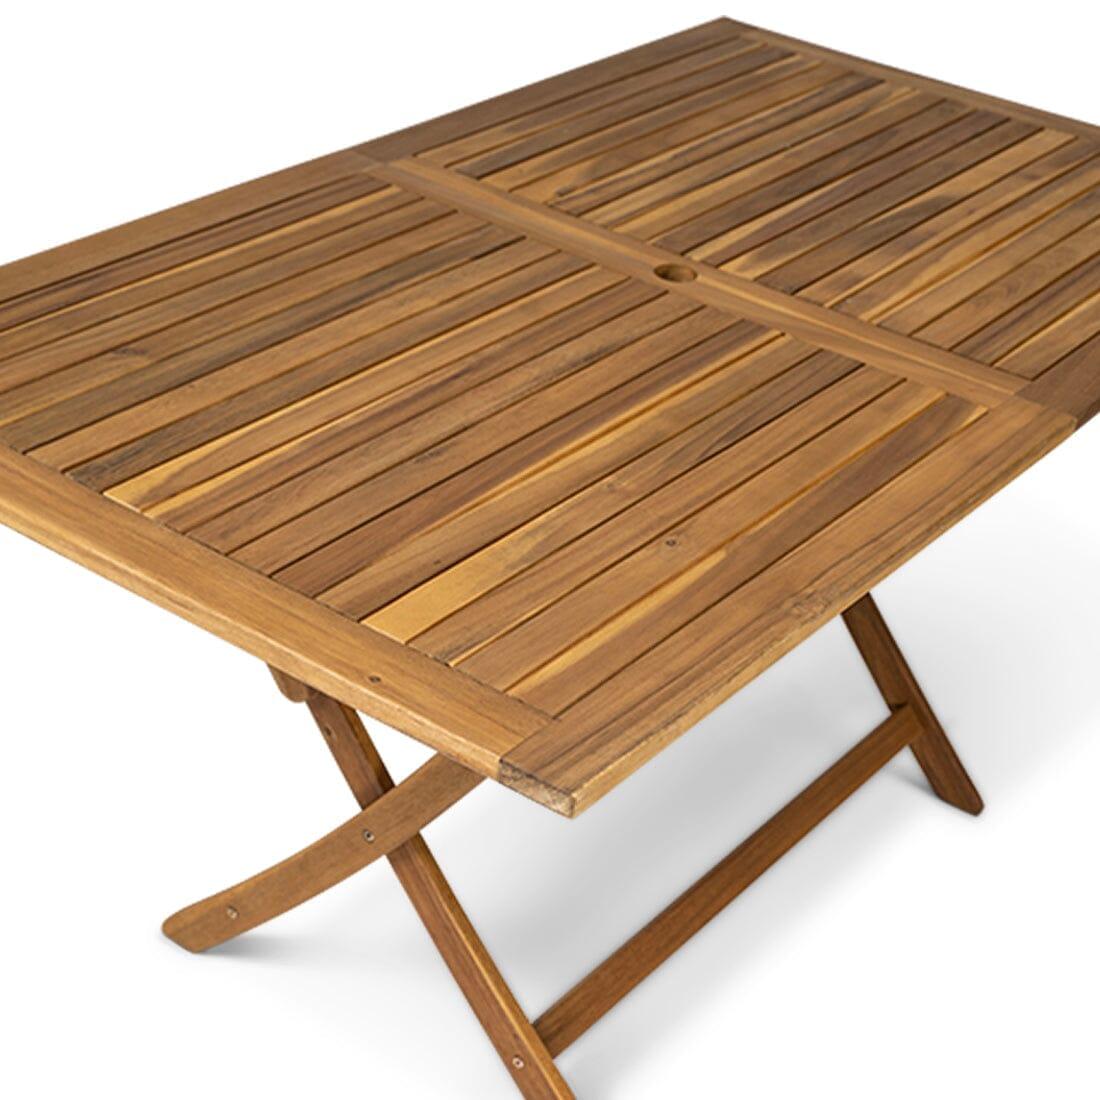 Ashby 6 Seater Wooden Rectangular Garden Dining Set - 150cm - Laura James